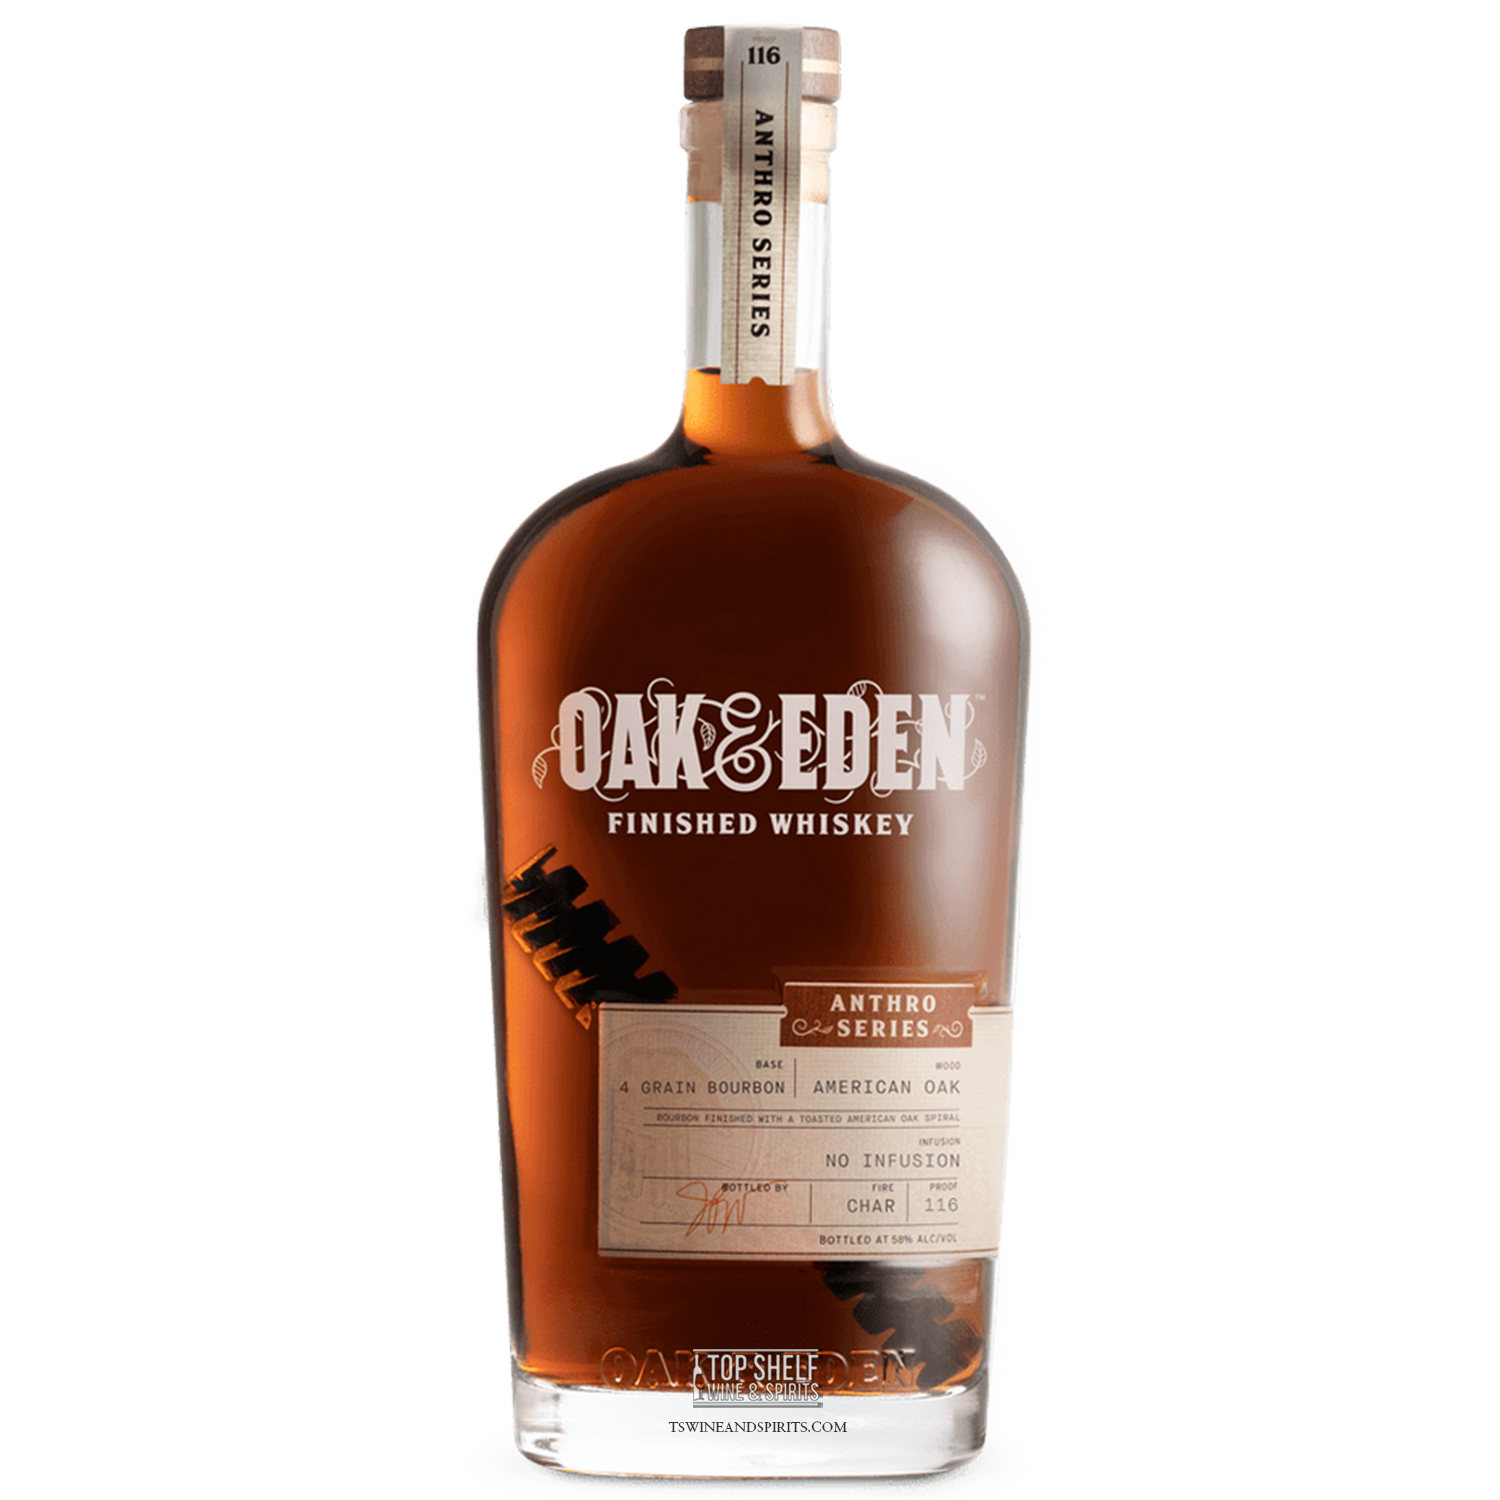 Oak & Eden John Paul White Bourbon (Anthro Series)